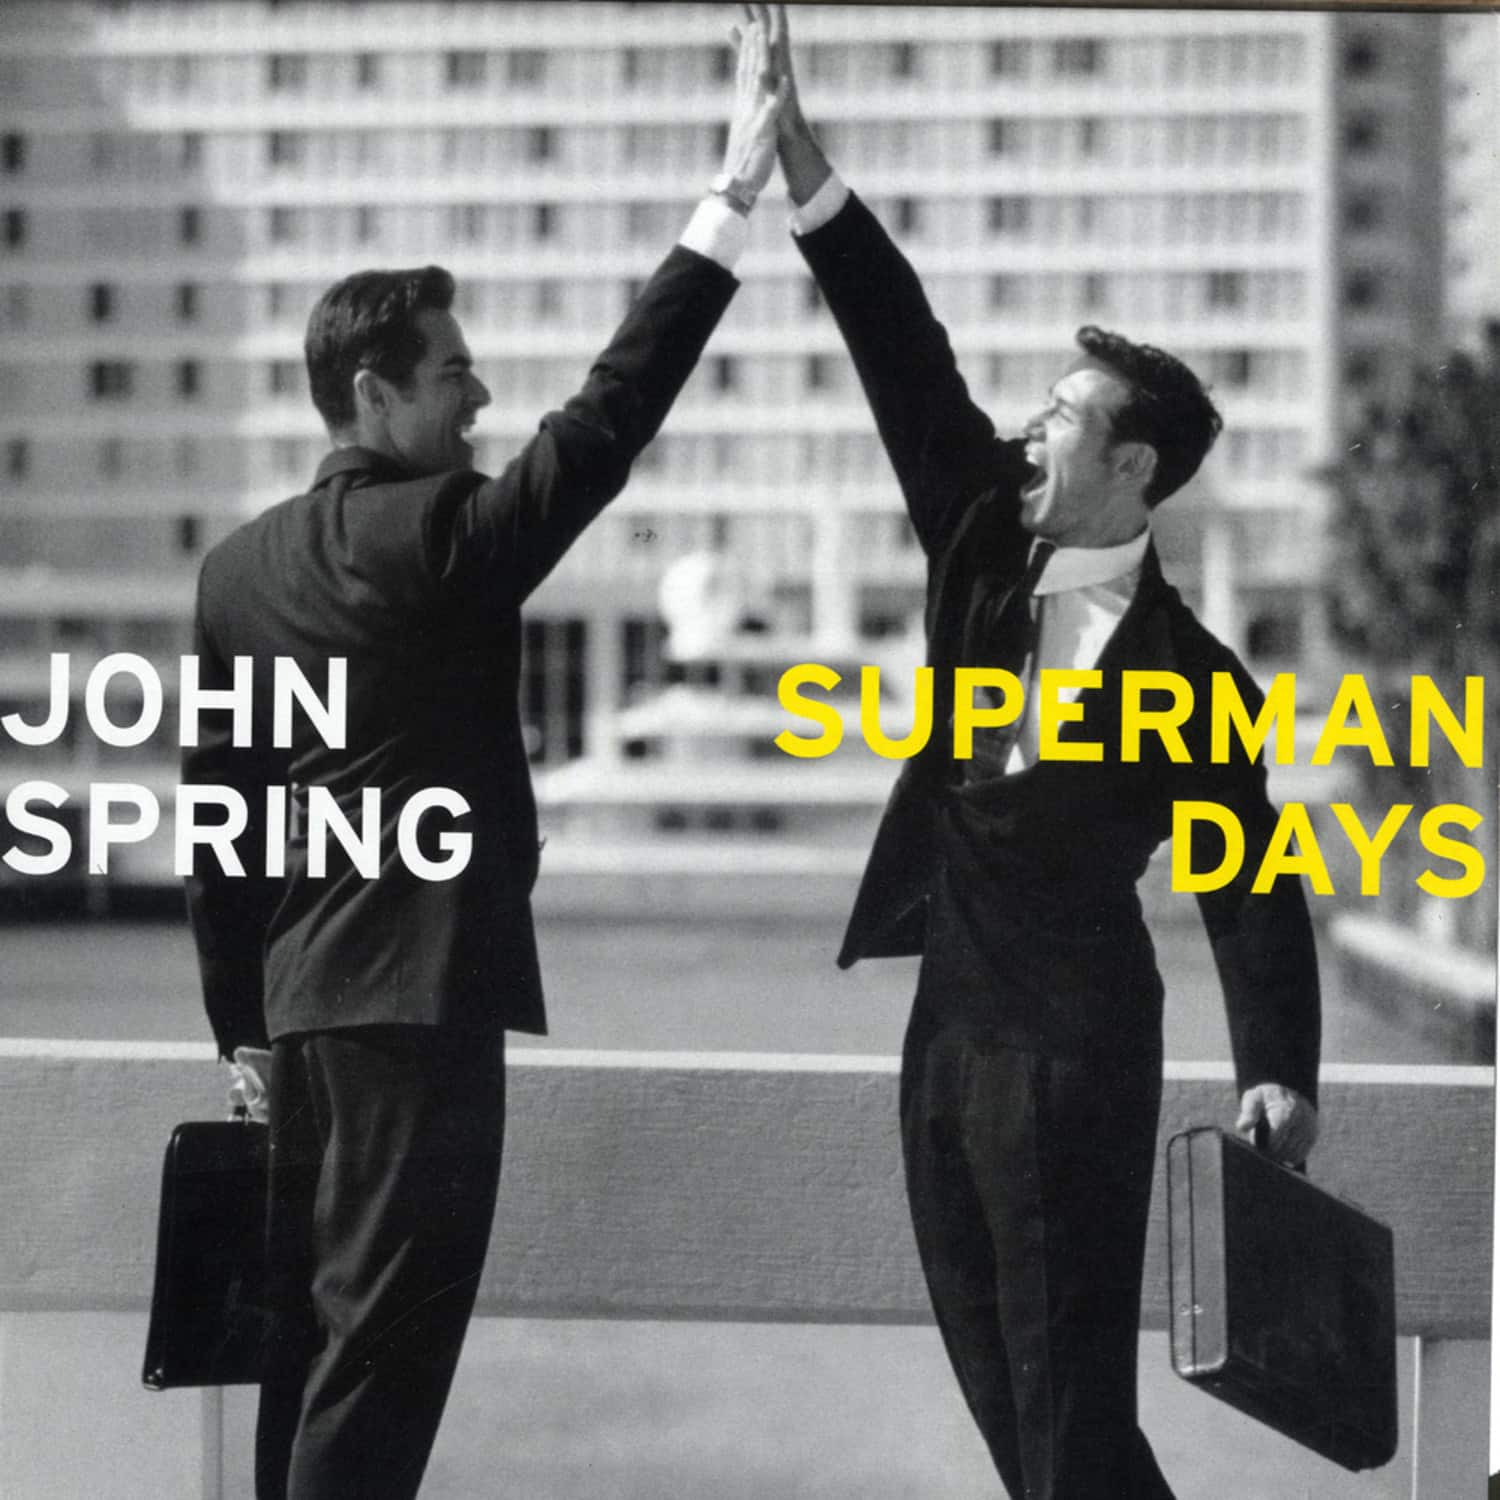 John Spring - SUPERMAN DAYS 